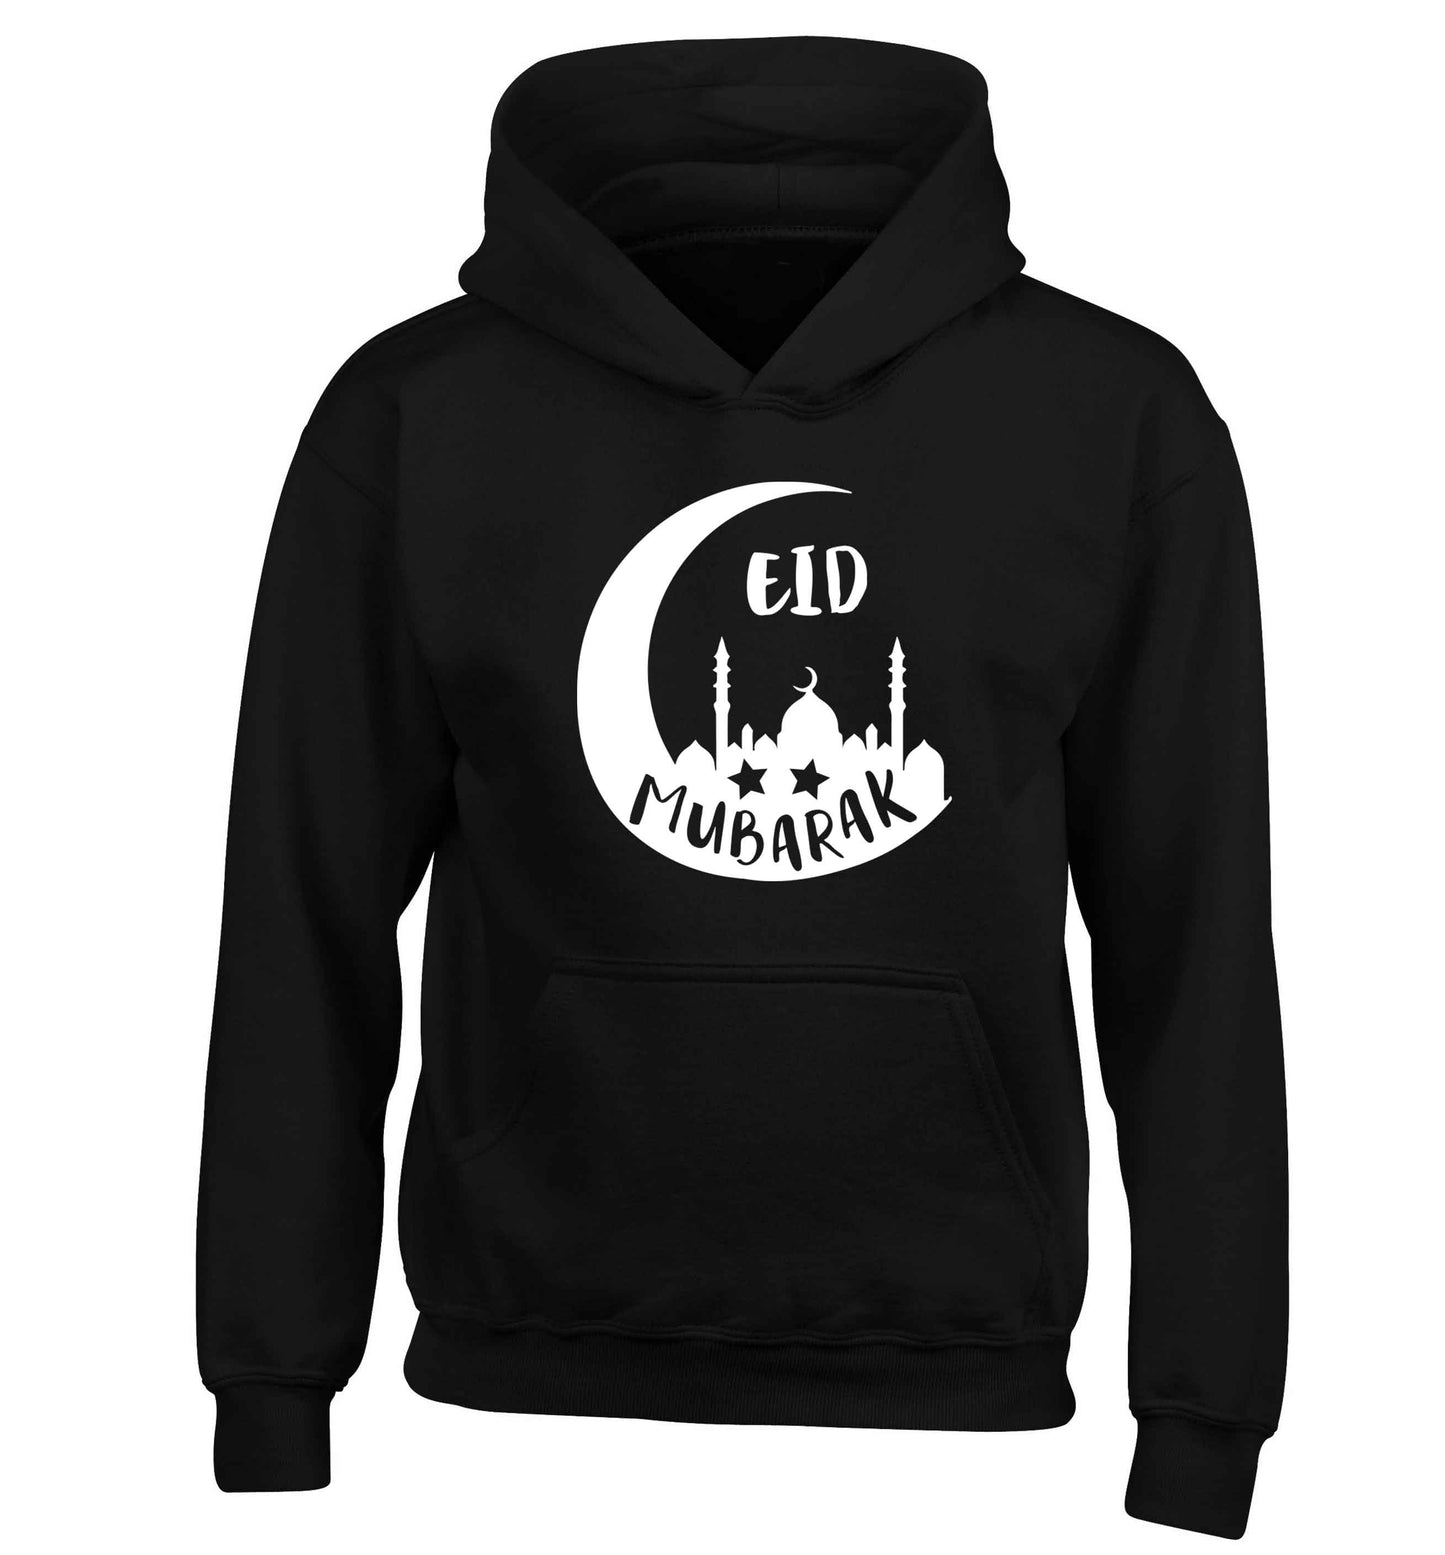 Eid mubarak children's black hoodie 12-13 Years